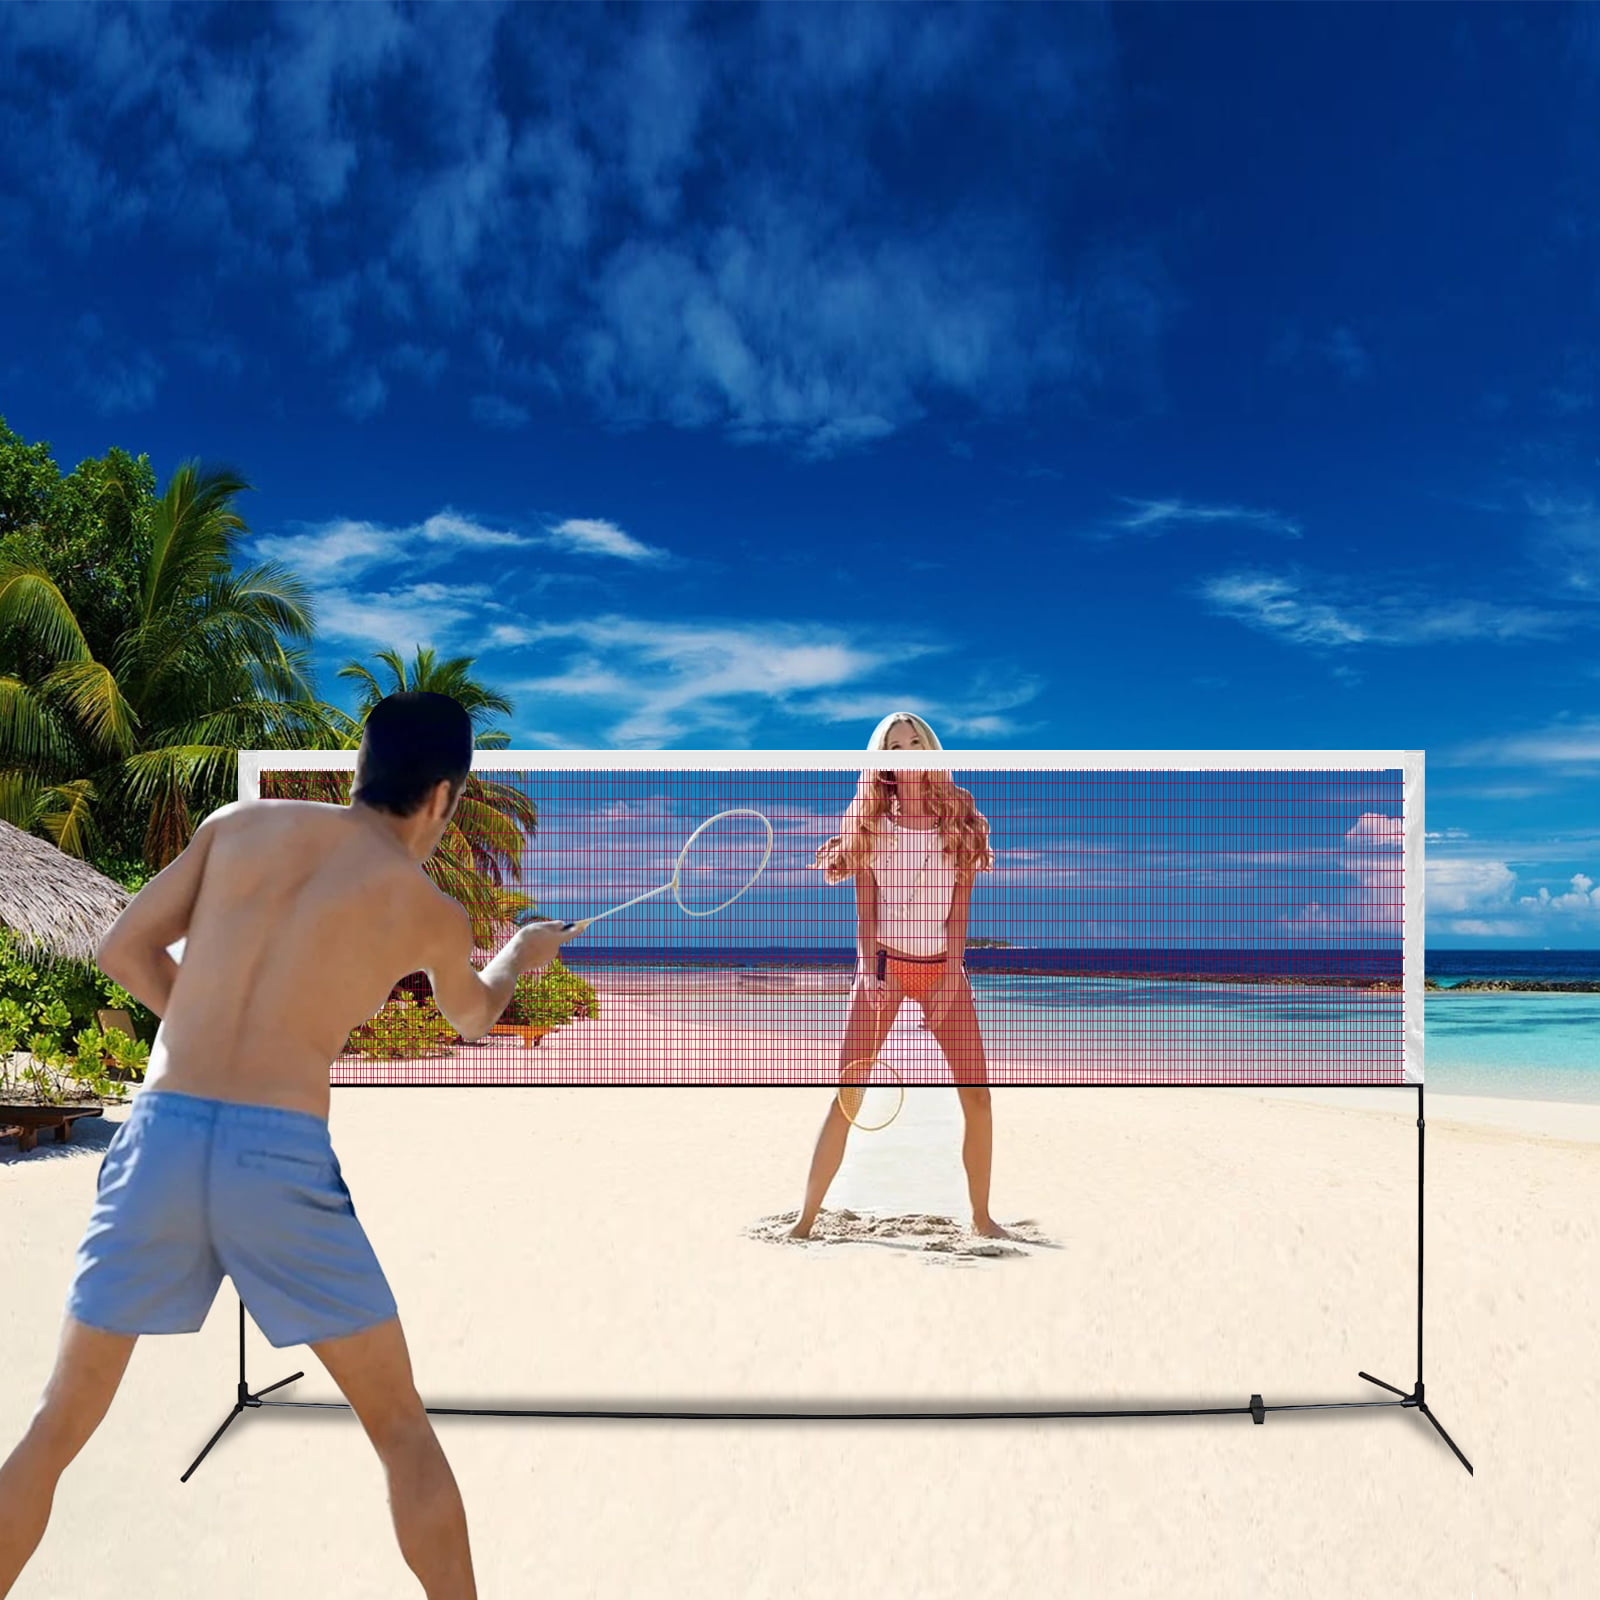 Outdoor Sports Classic Volleyball Net for Garden Beach Schoolyard Badminton Nets 